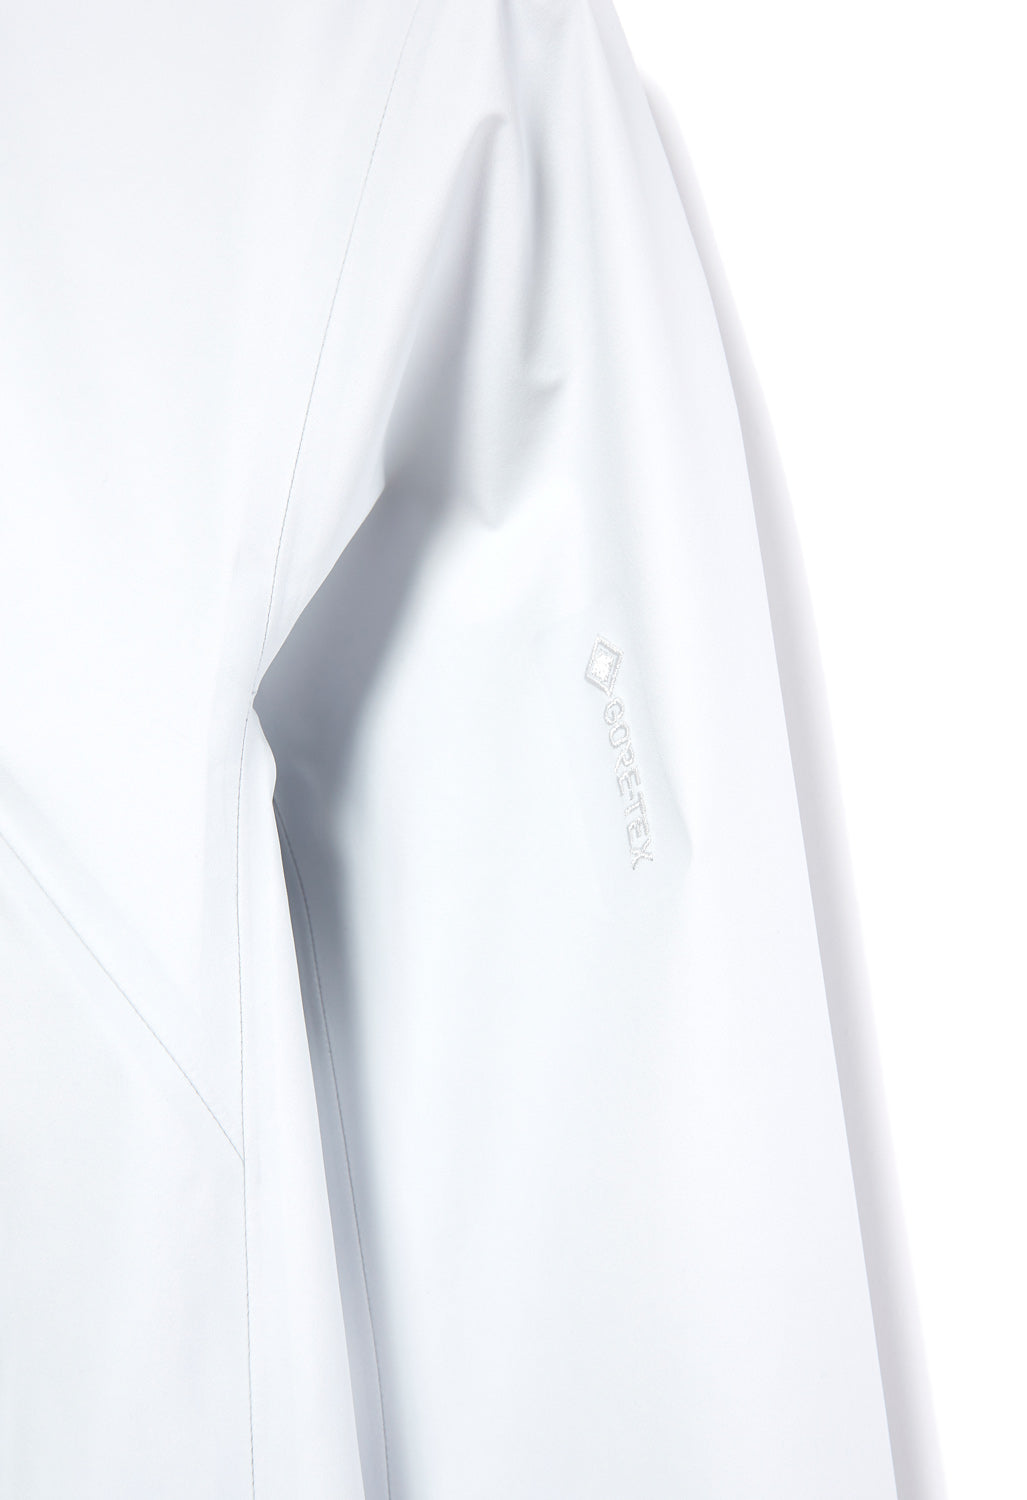 Arc'teryx Beta GORE-TEX Women's Jacket - Ambient Slate